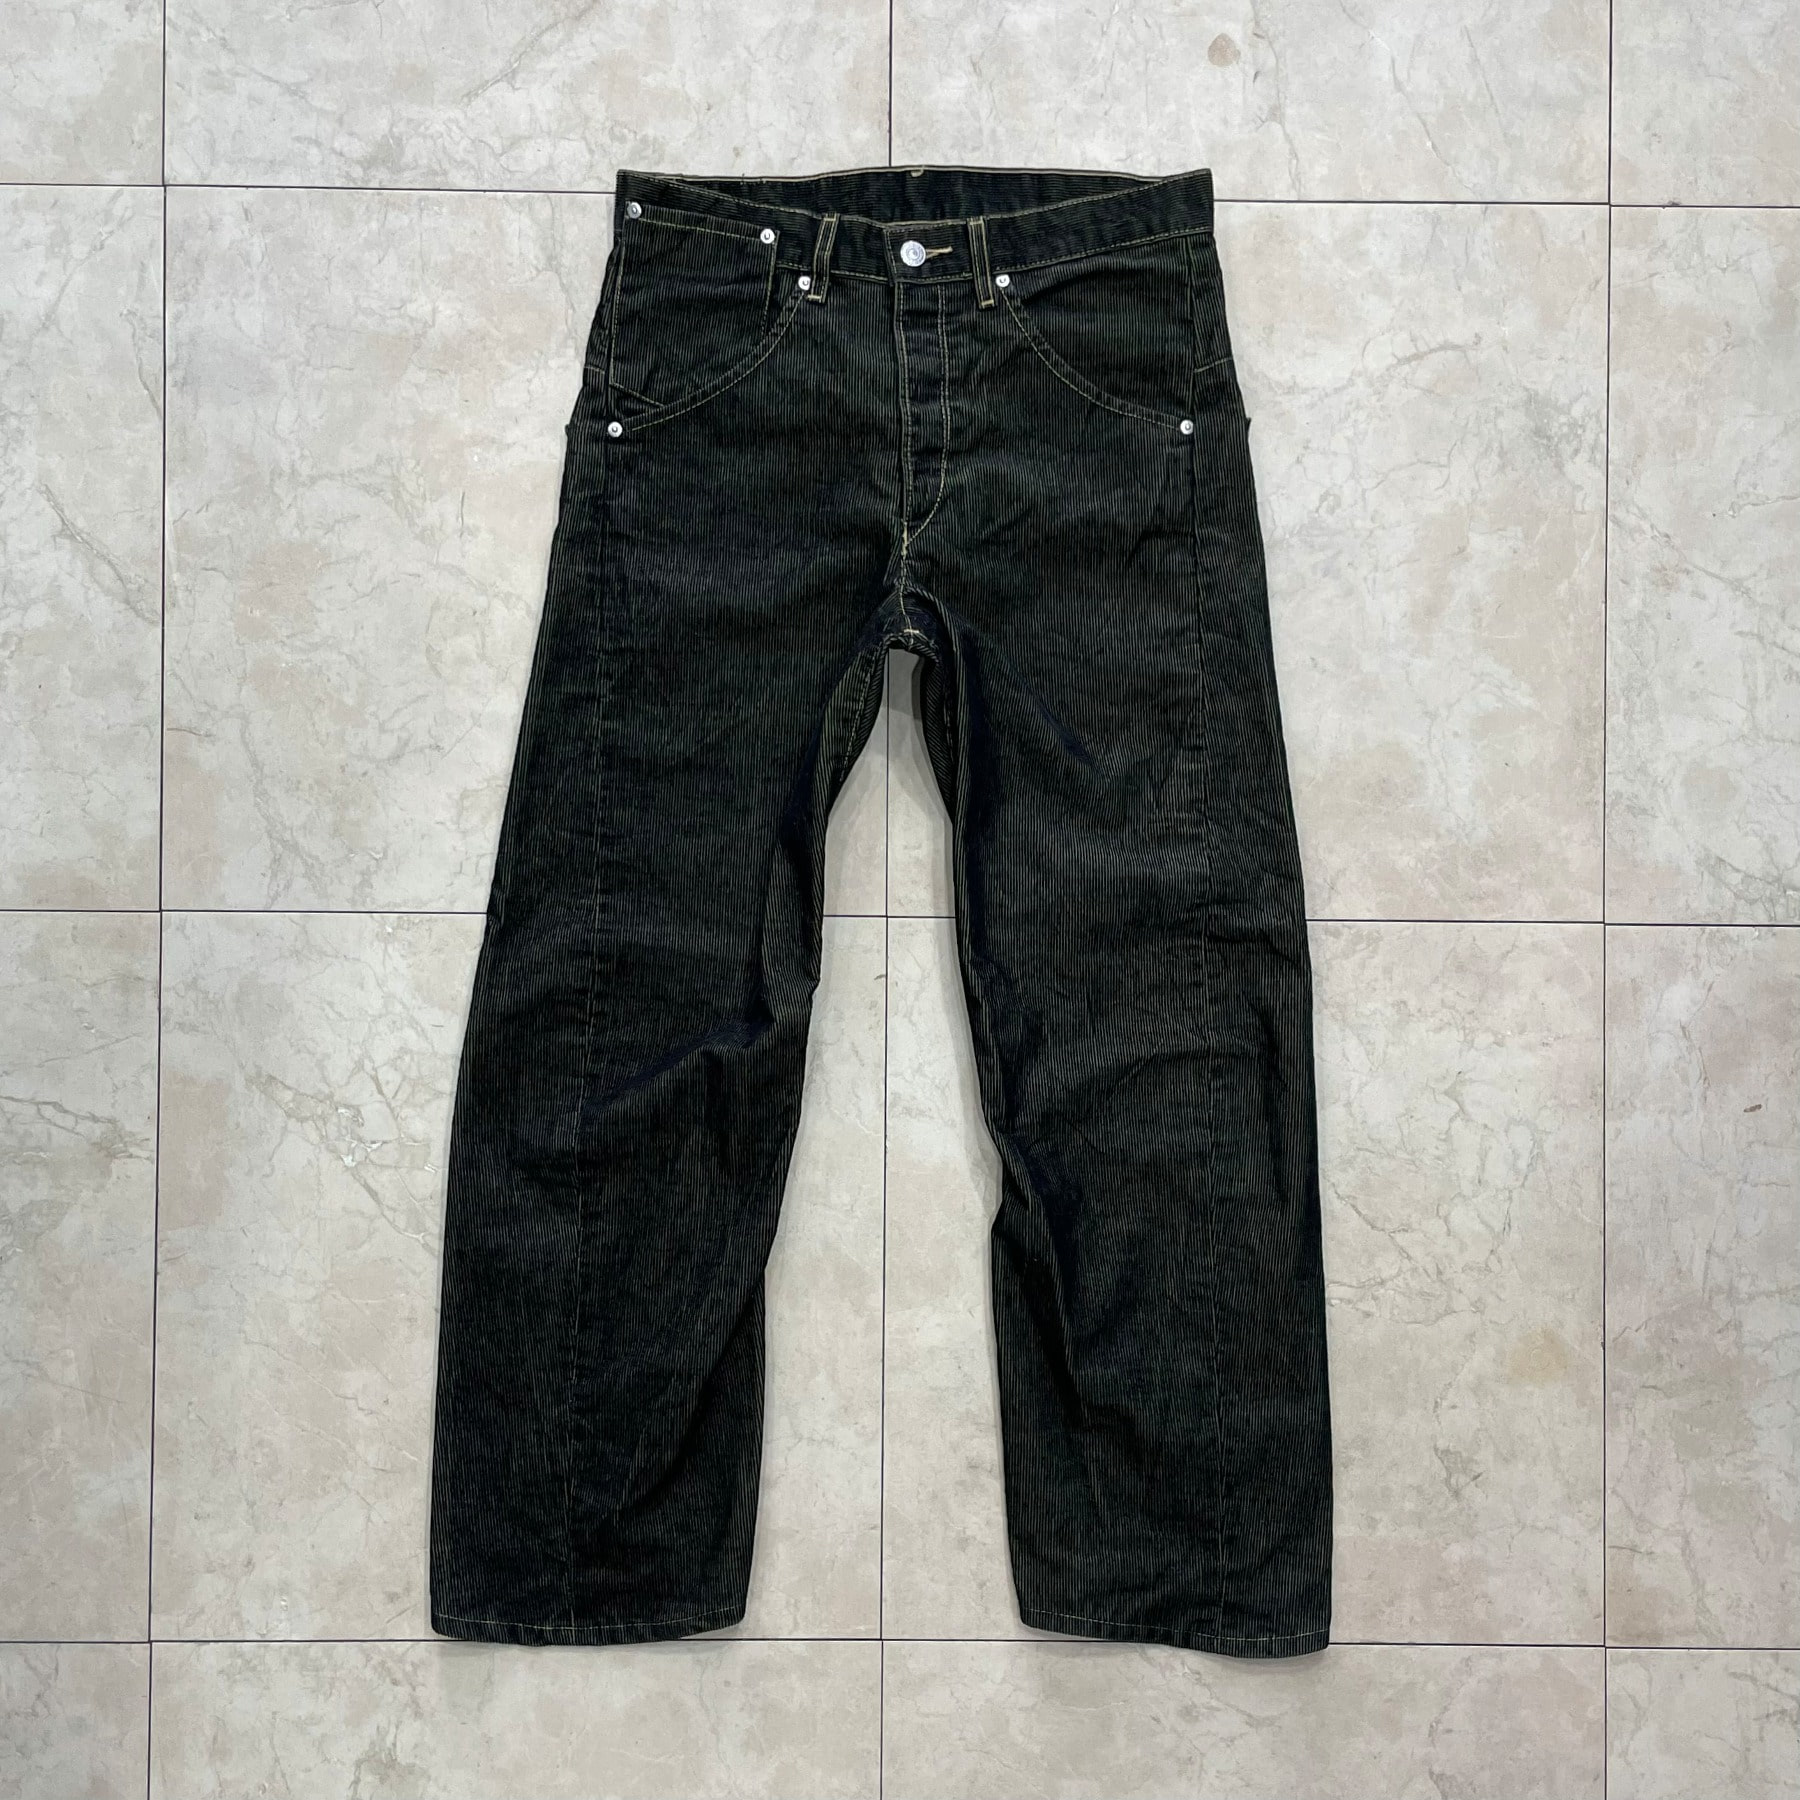 Levis Engineered Jeans Corduroy - 30inch